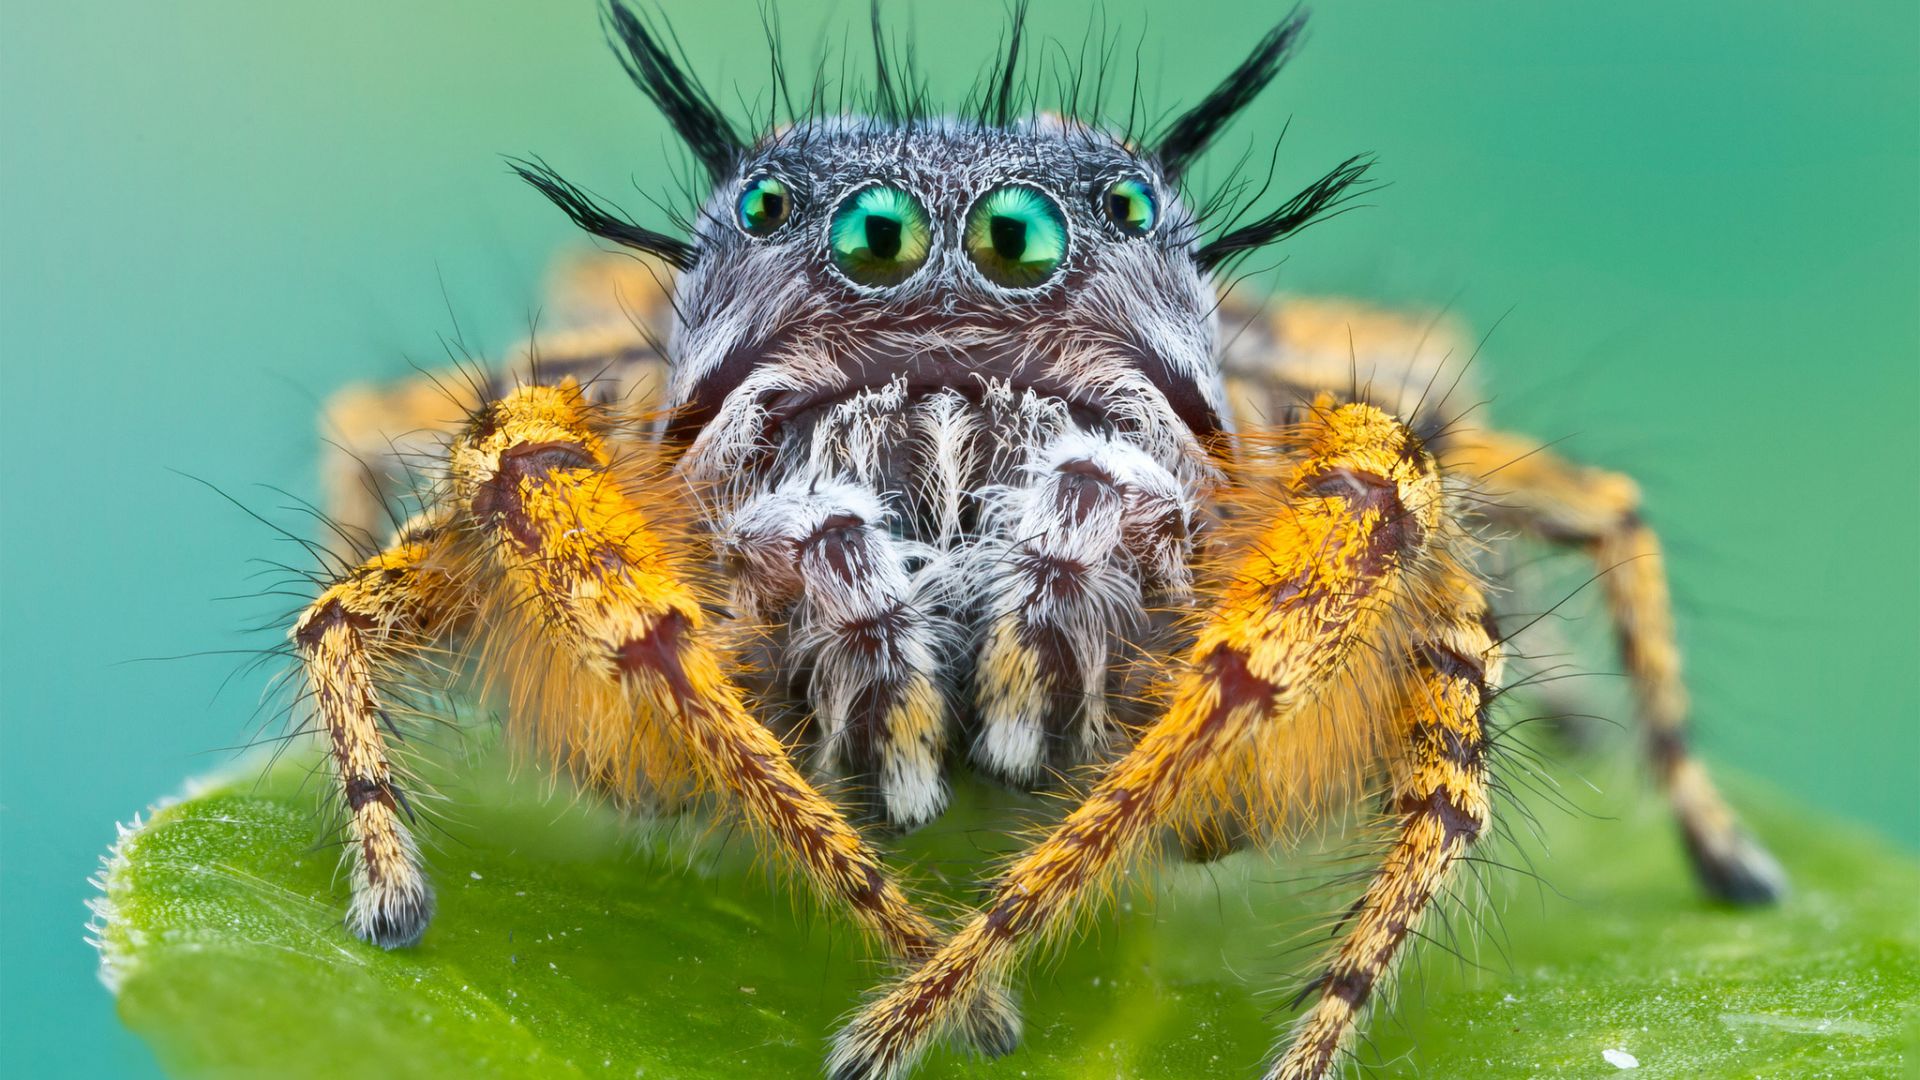 Багира киплинг, паук, макро, Bagheera kiplingi, spider, macro (horizontal)